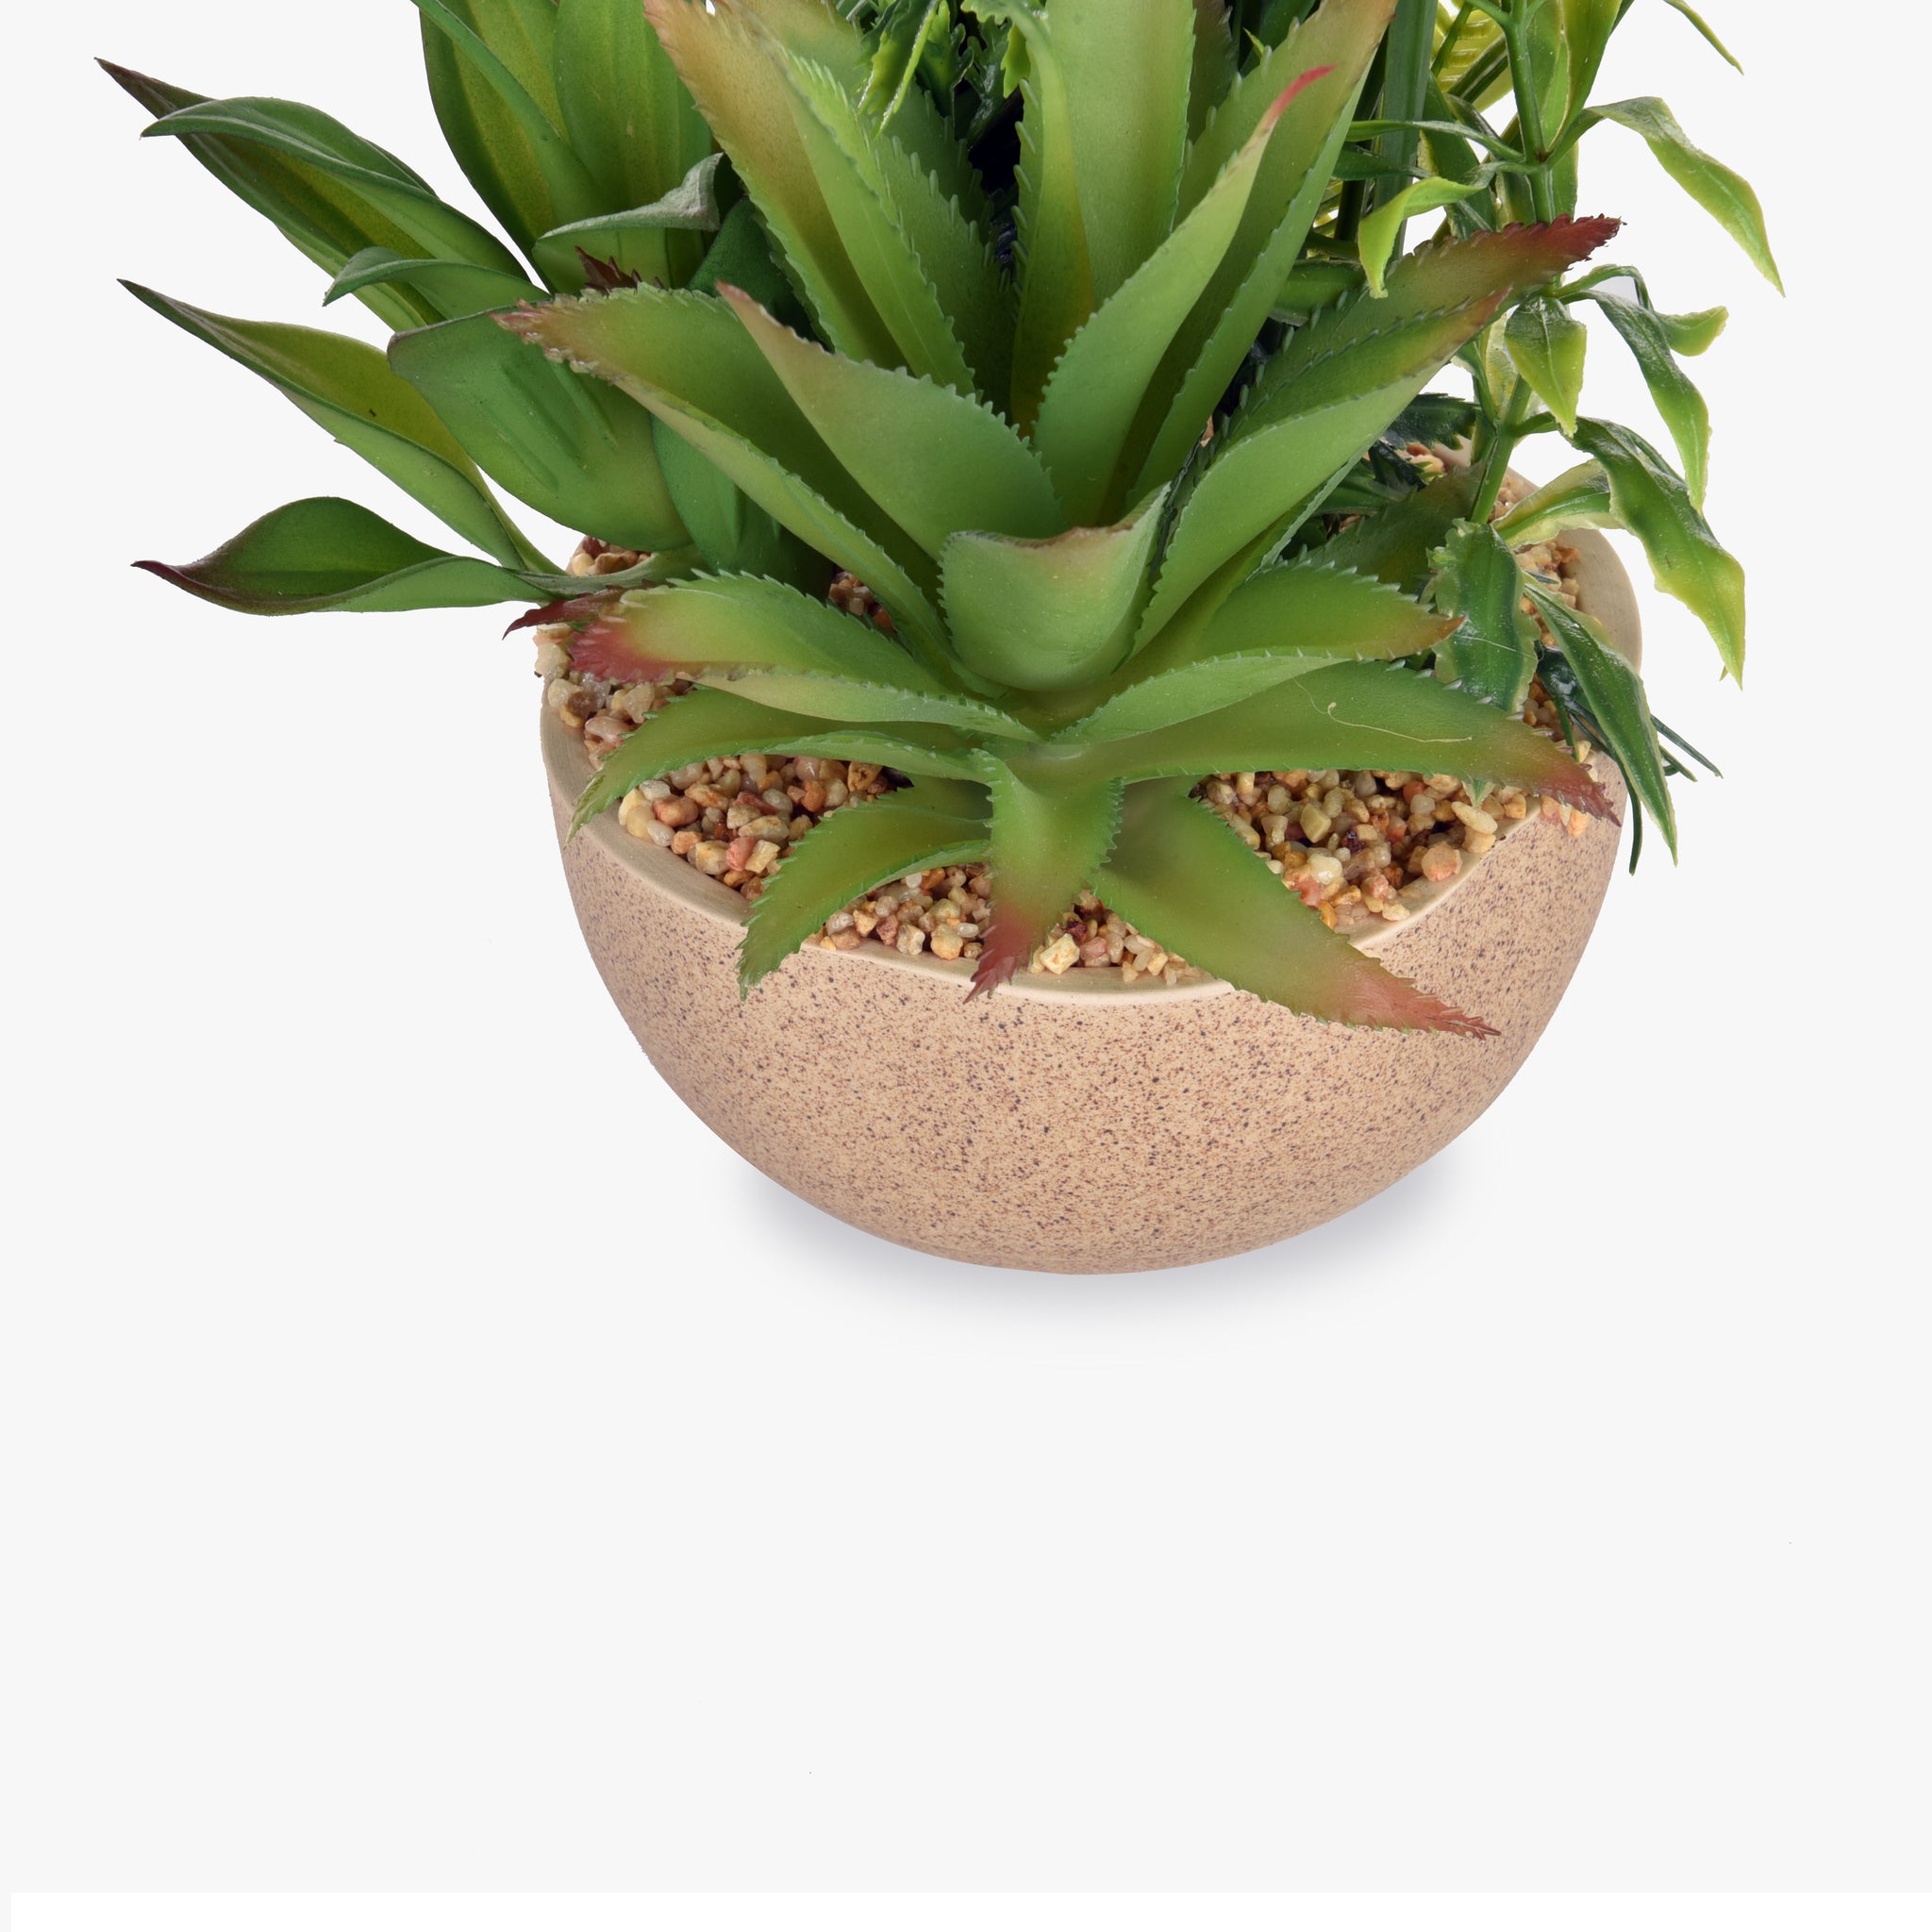 Abstract Plant Arrangement With Ductile Pot